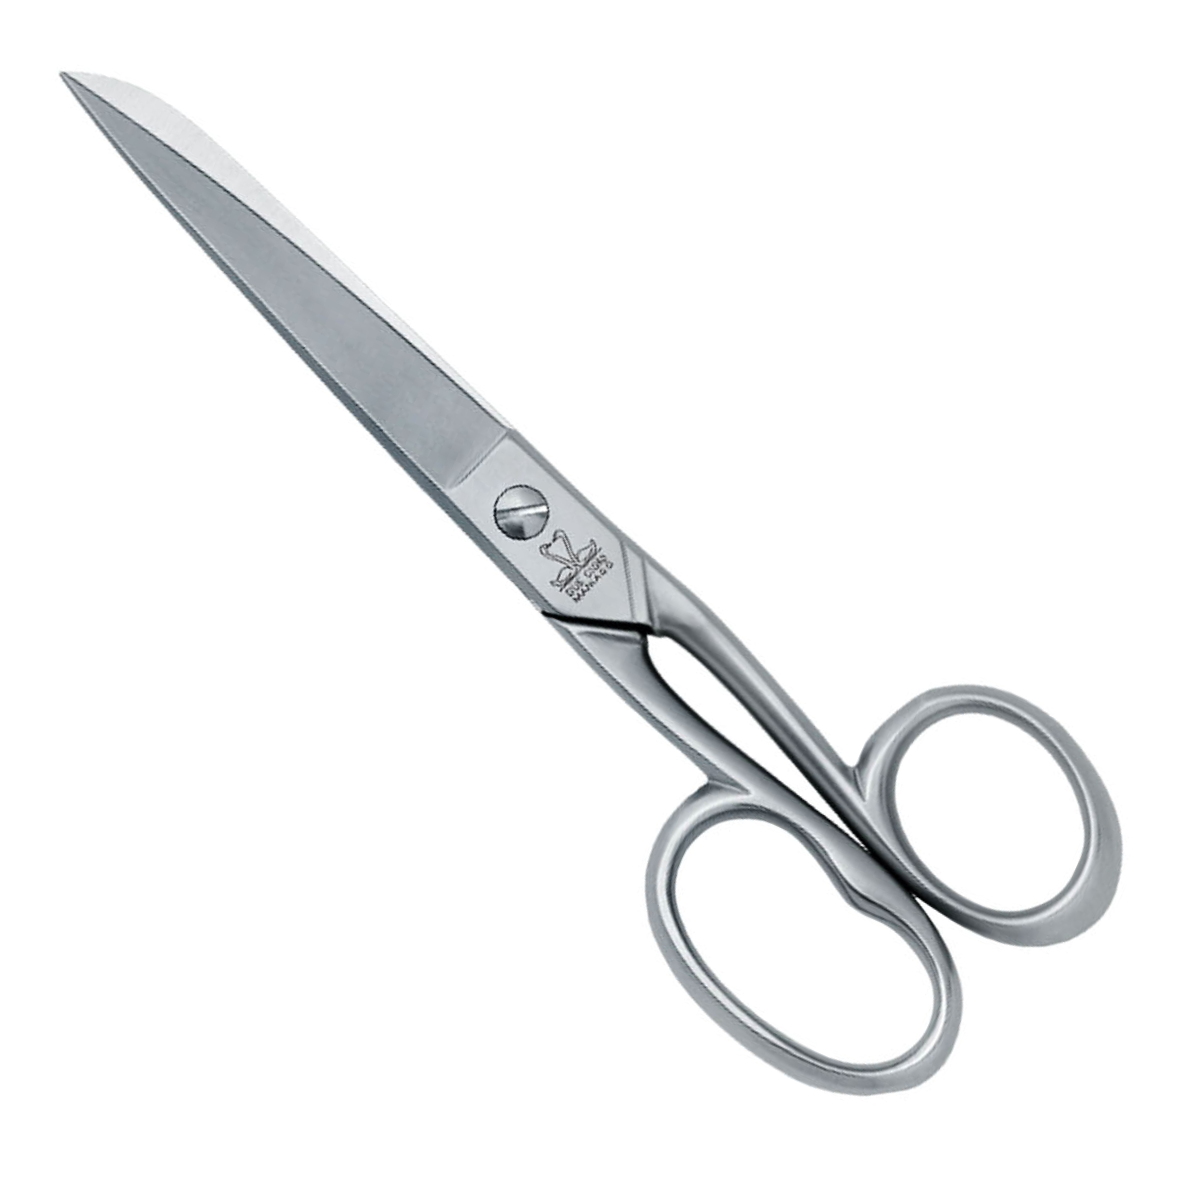 7 Inch Metal Tailoring Scissors